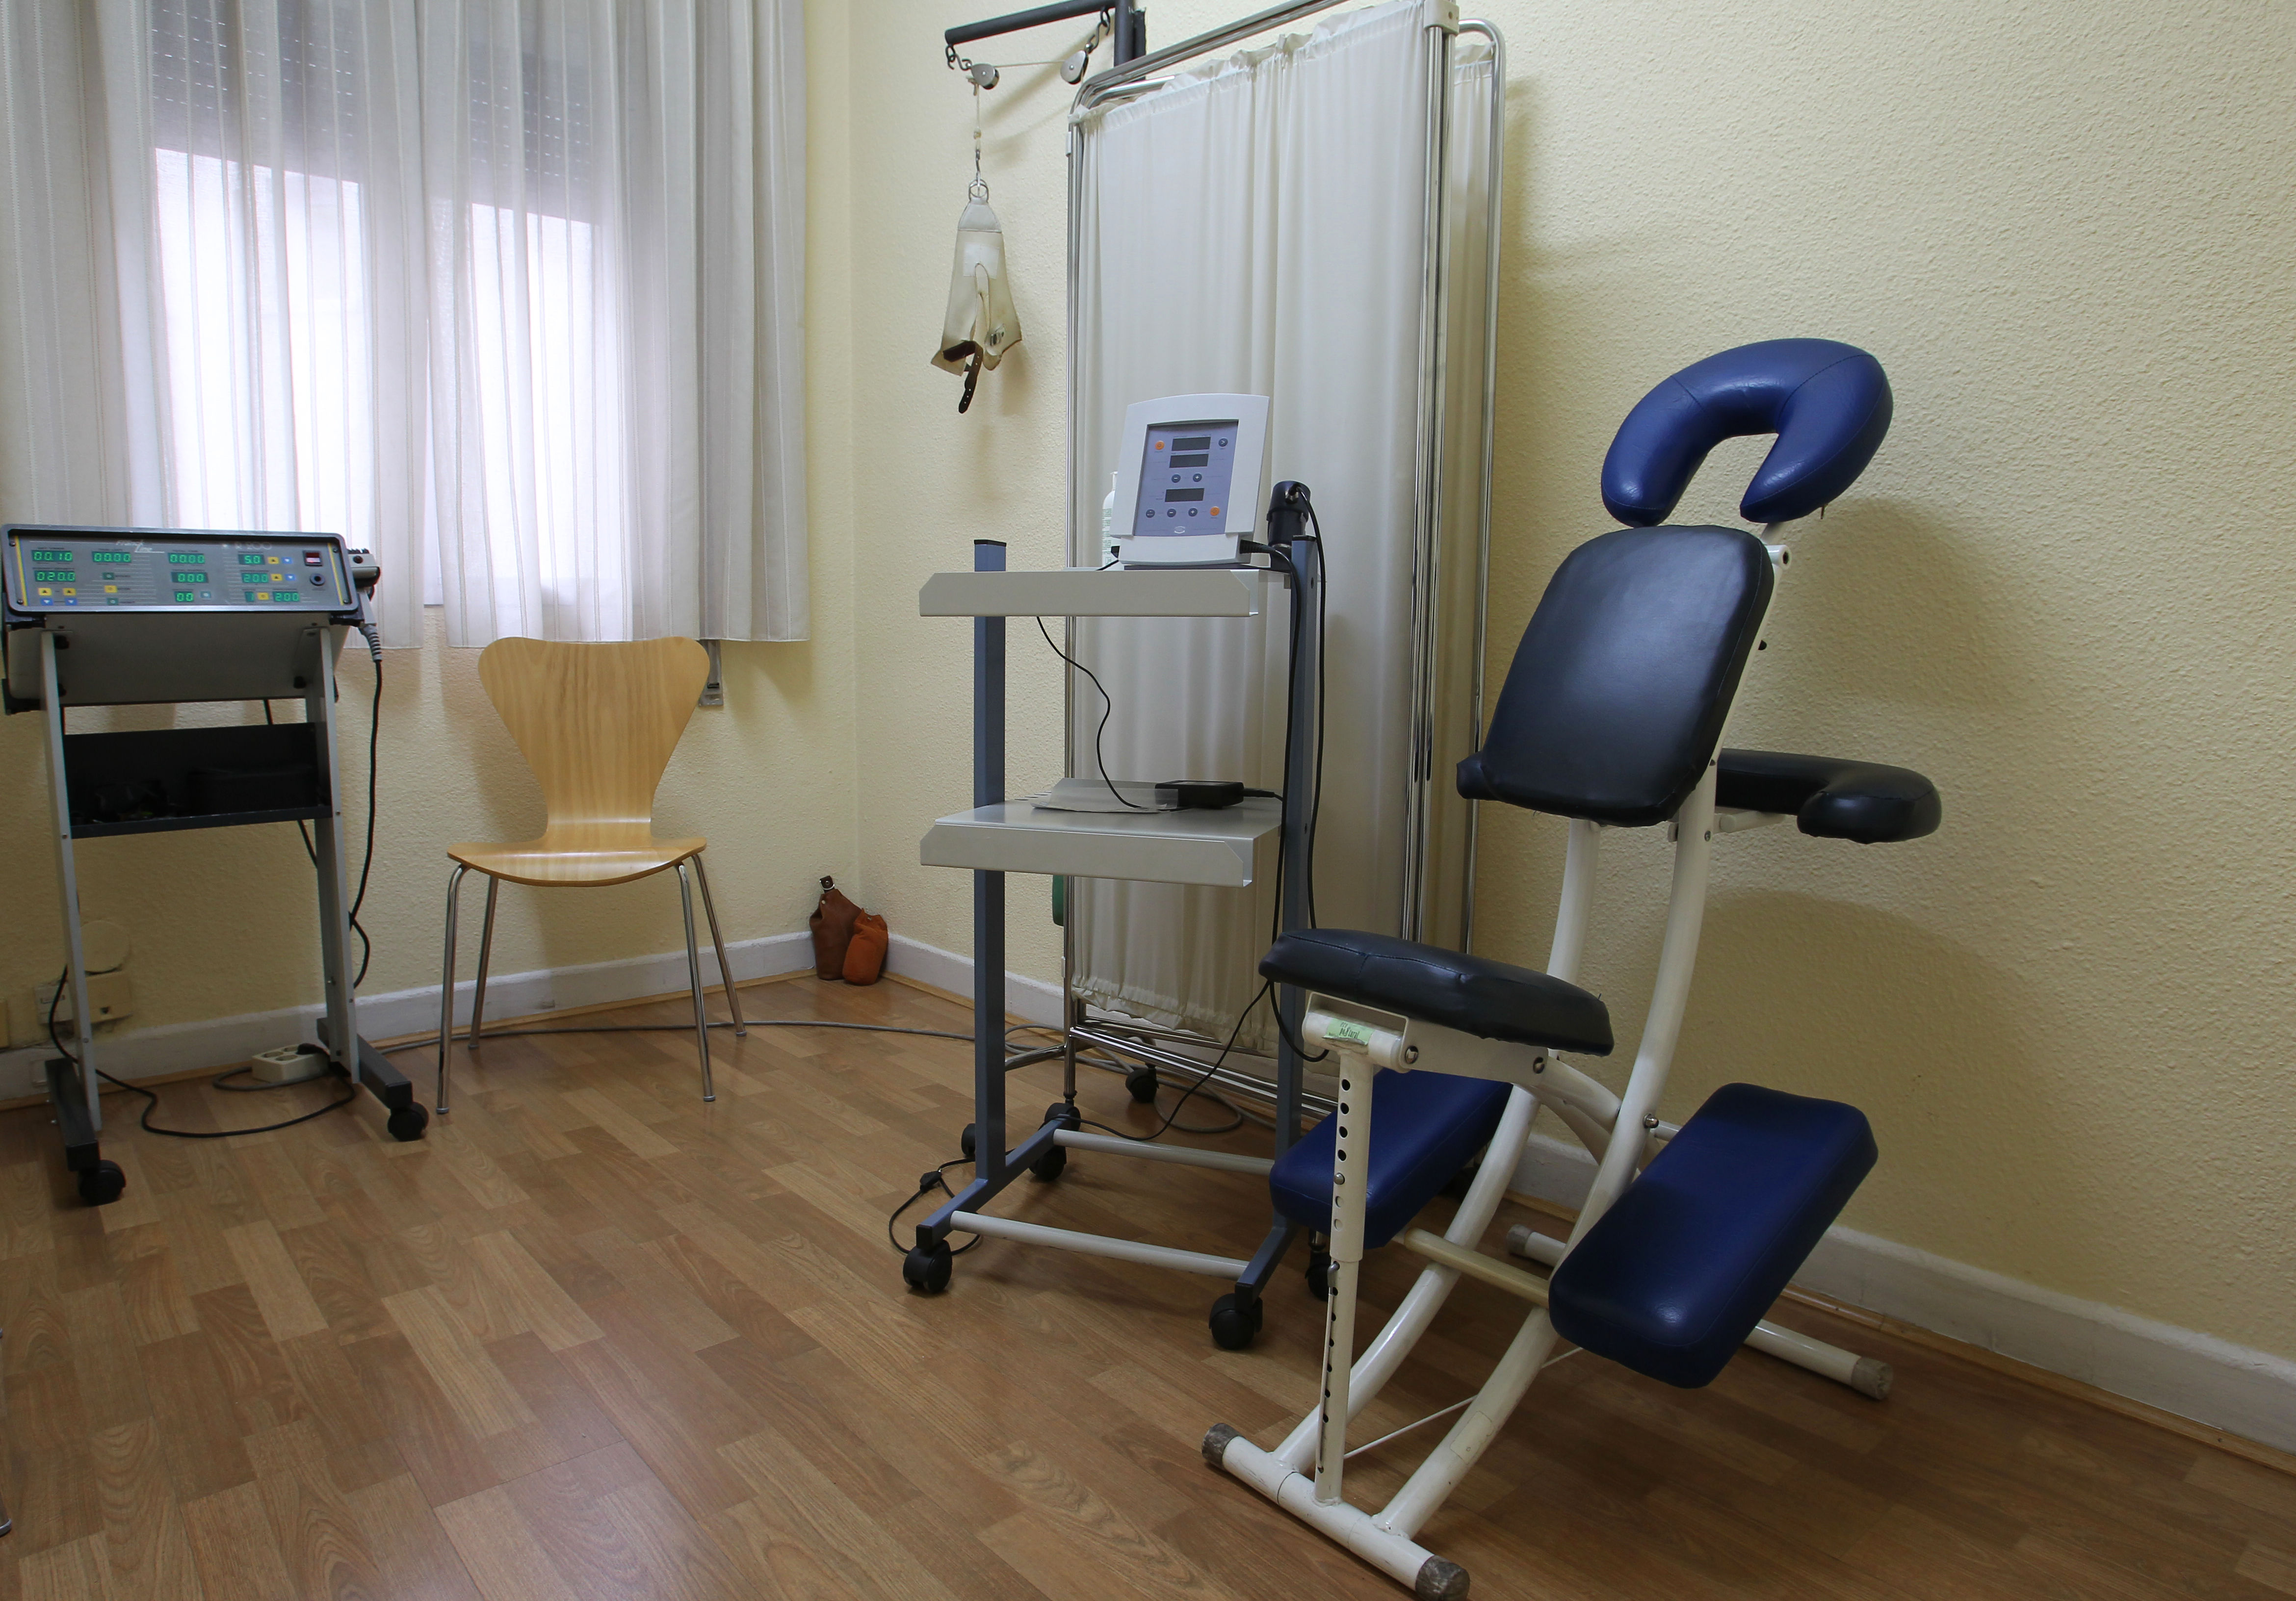 Foto 3 de Fisioterapia en Madrid | Alberfis